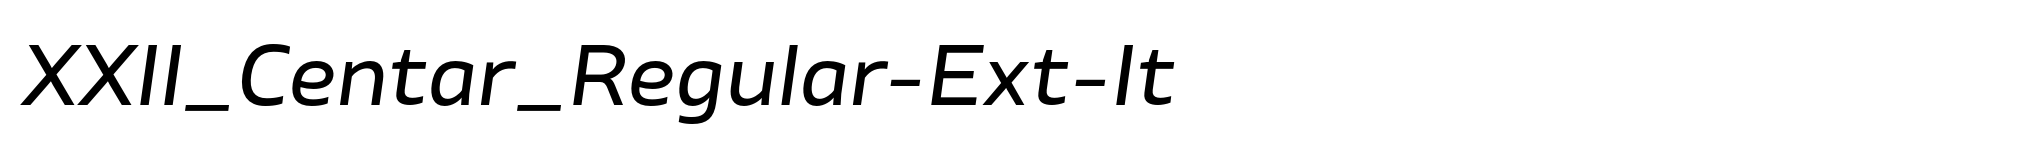 XXII_Centar_Regular-Ext-It image